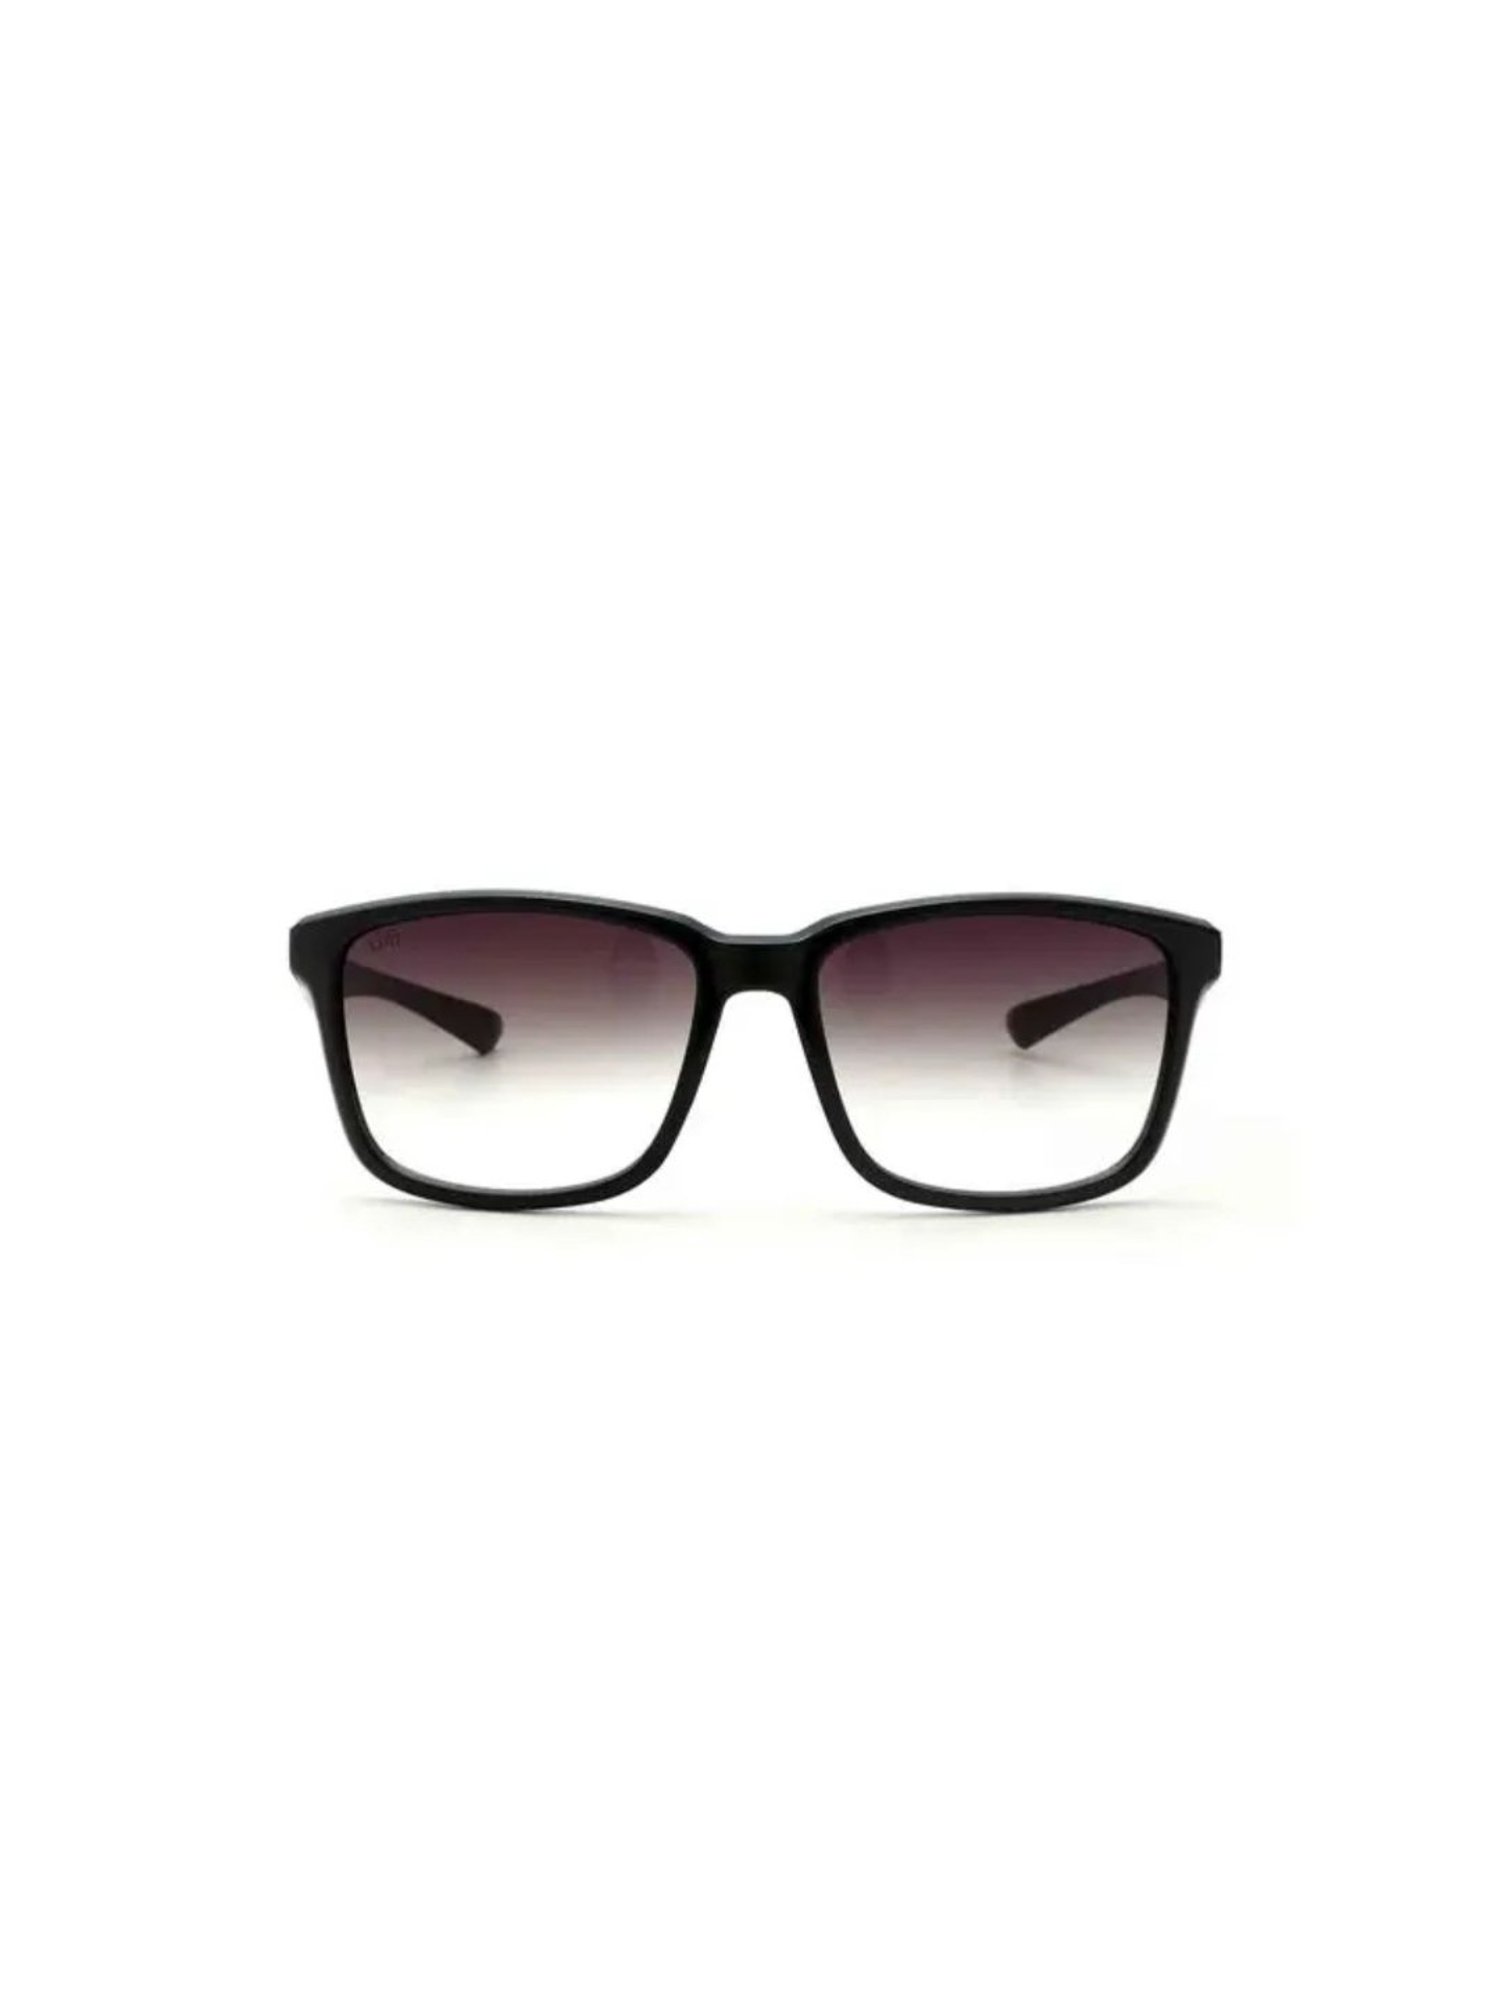 Buy Black Sunglasses for Women by Eyewearlabs Online | Ajio.com